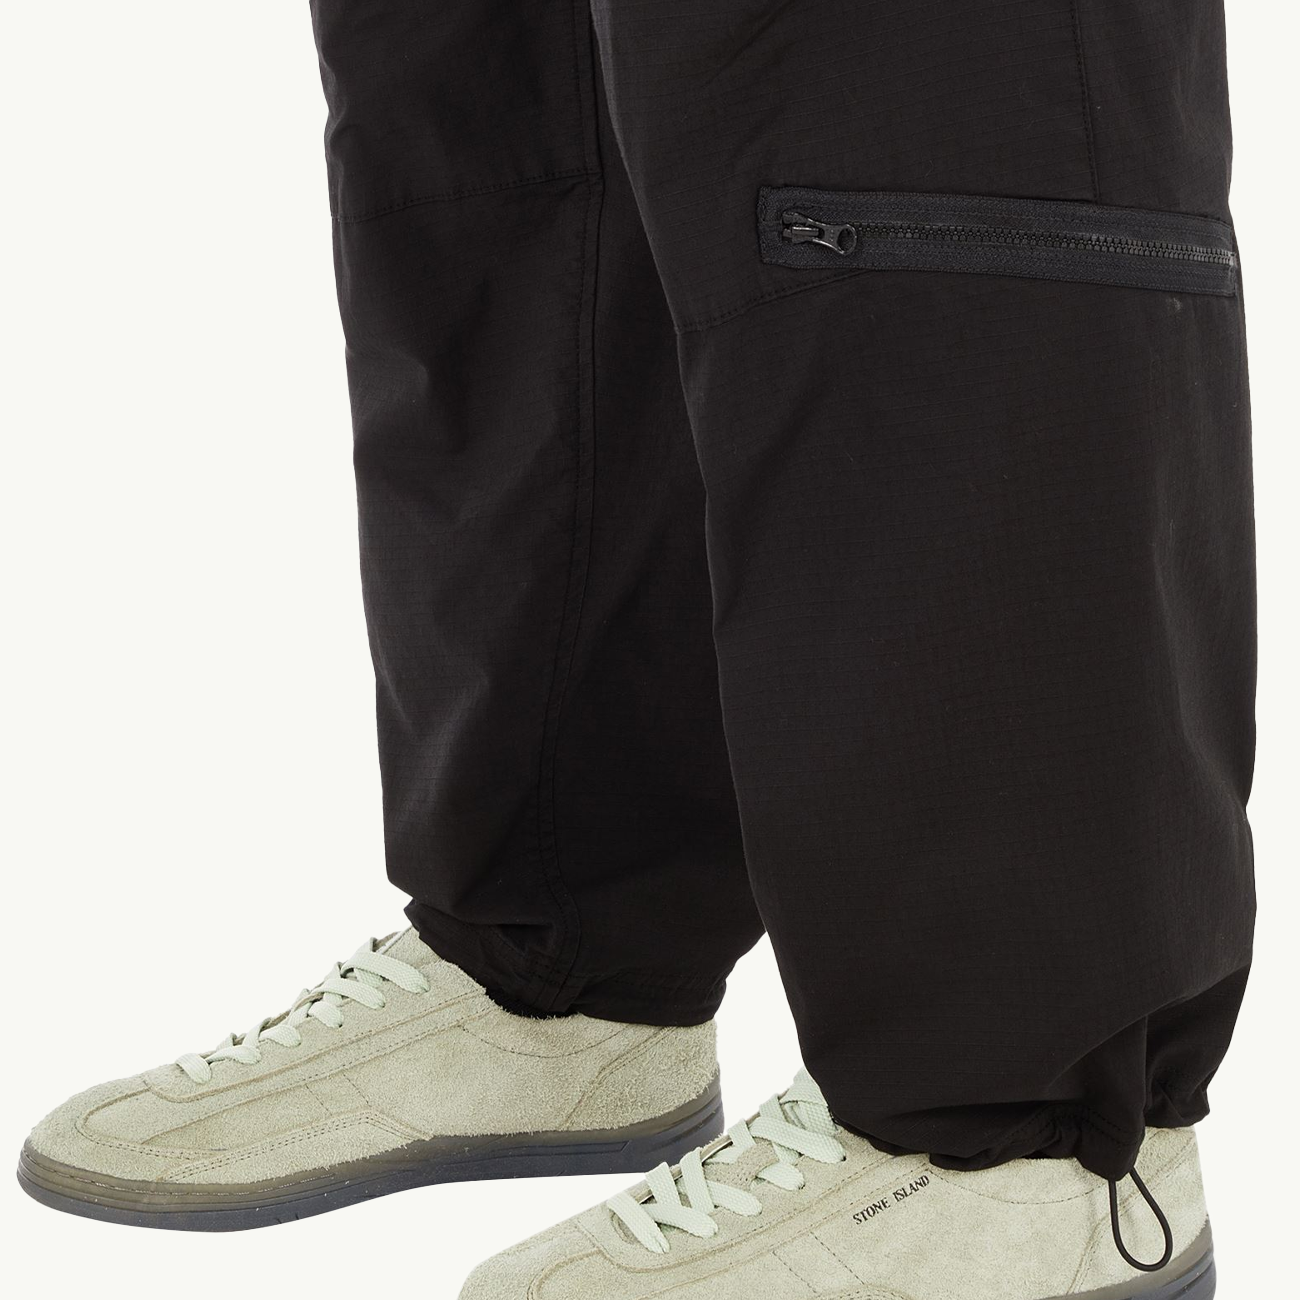 Pants Patch Comfort Double Zip - Black 2980